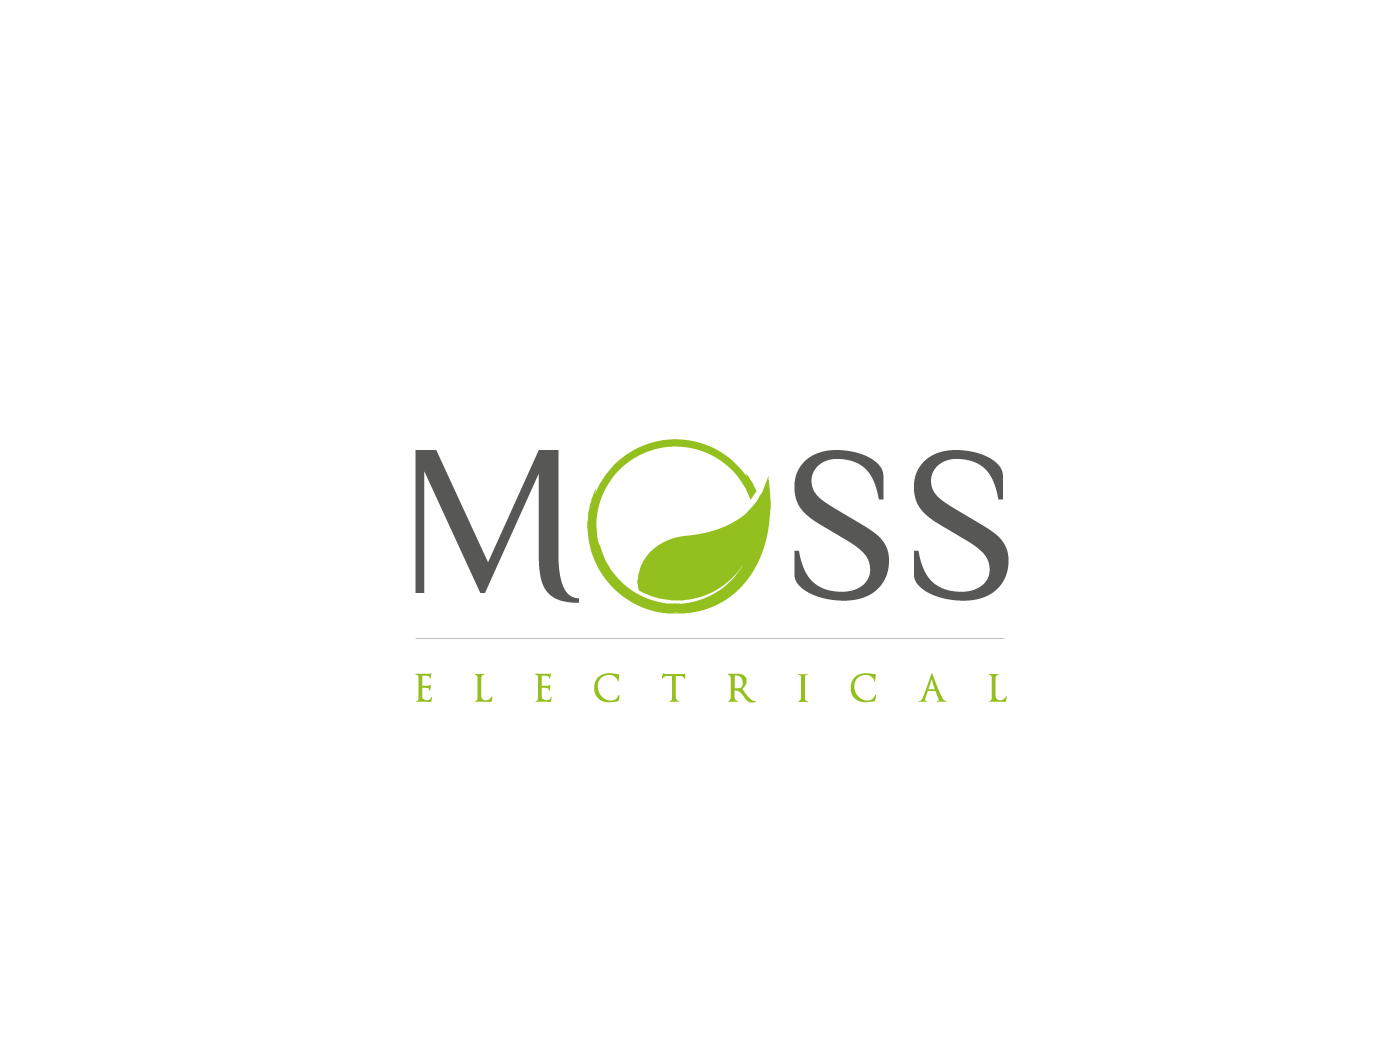 Moss Logo - Modern, Professional, Electrical Logo Design for Moss Electrical